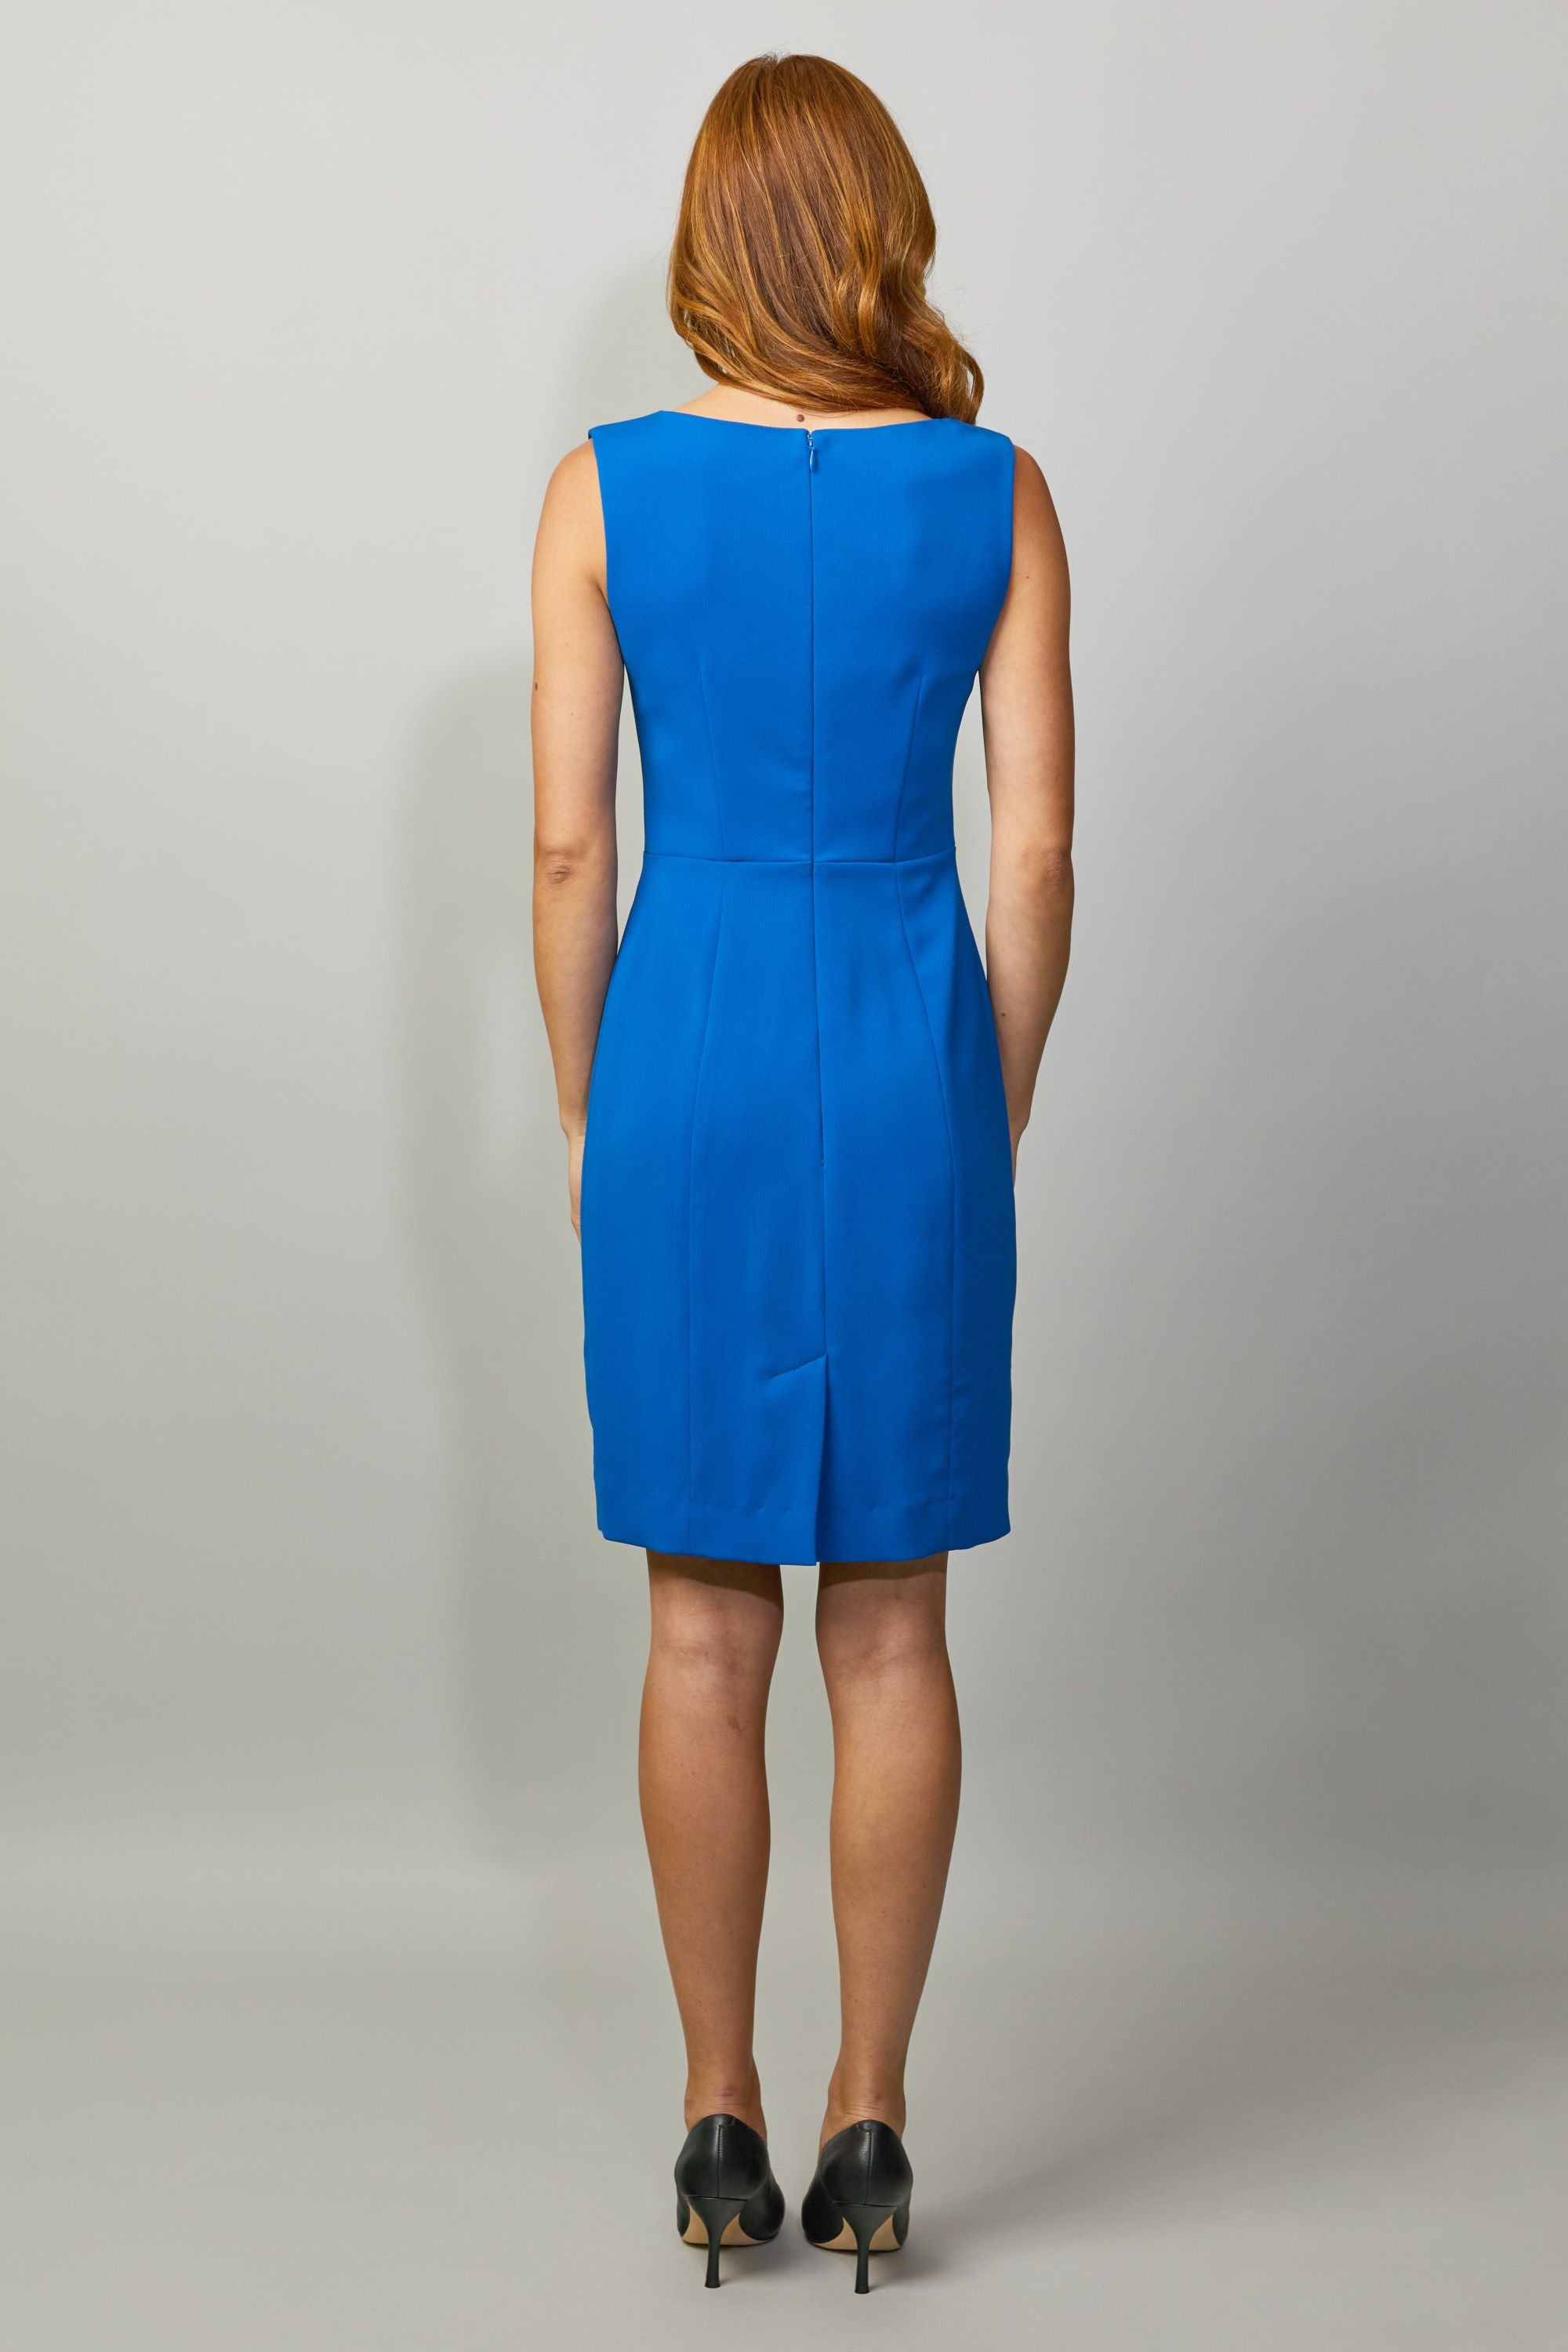 Clea Dress - Royal Blue